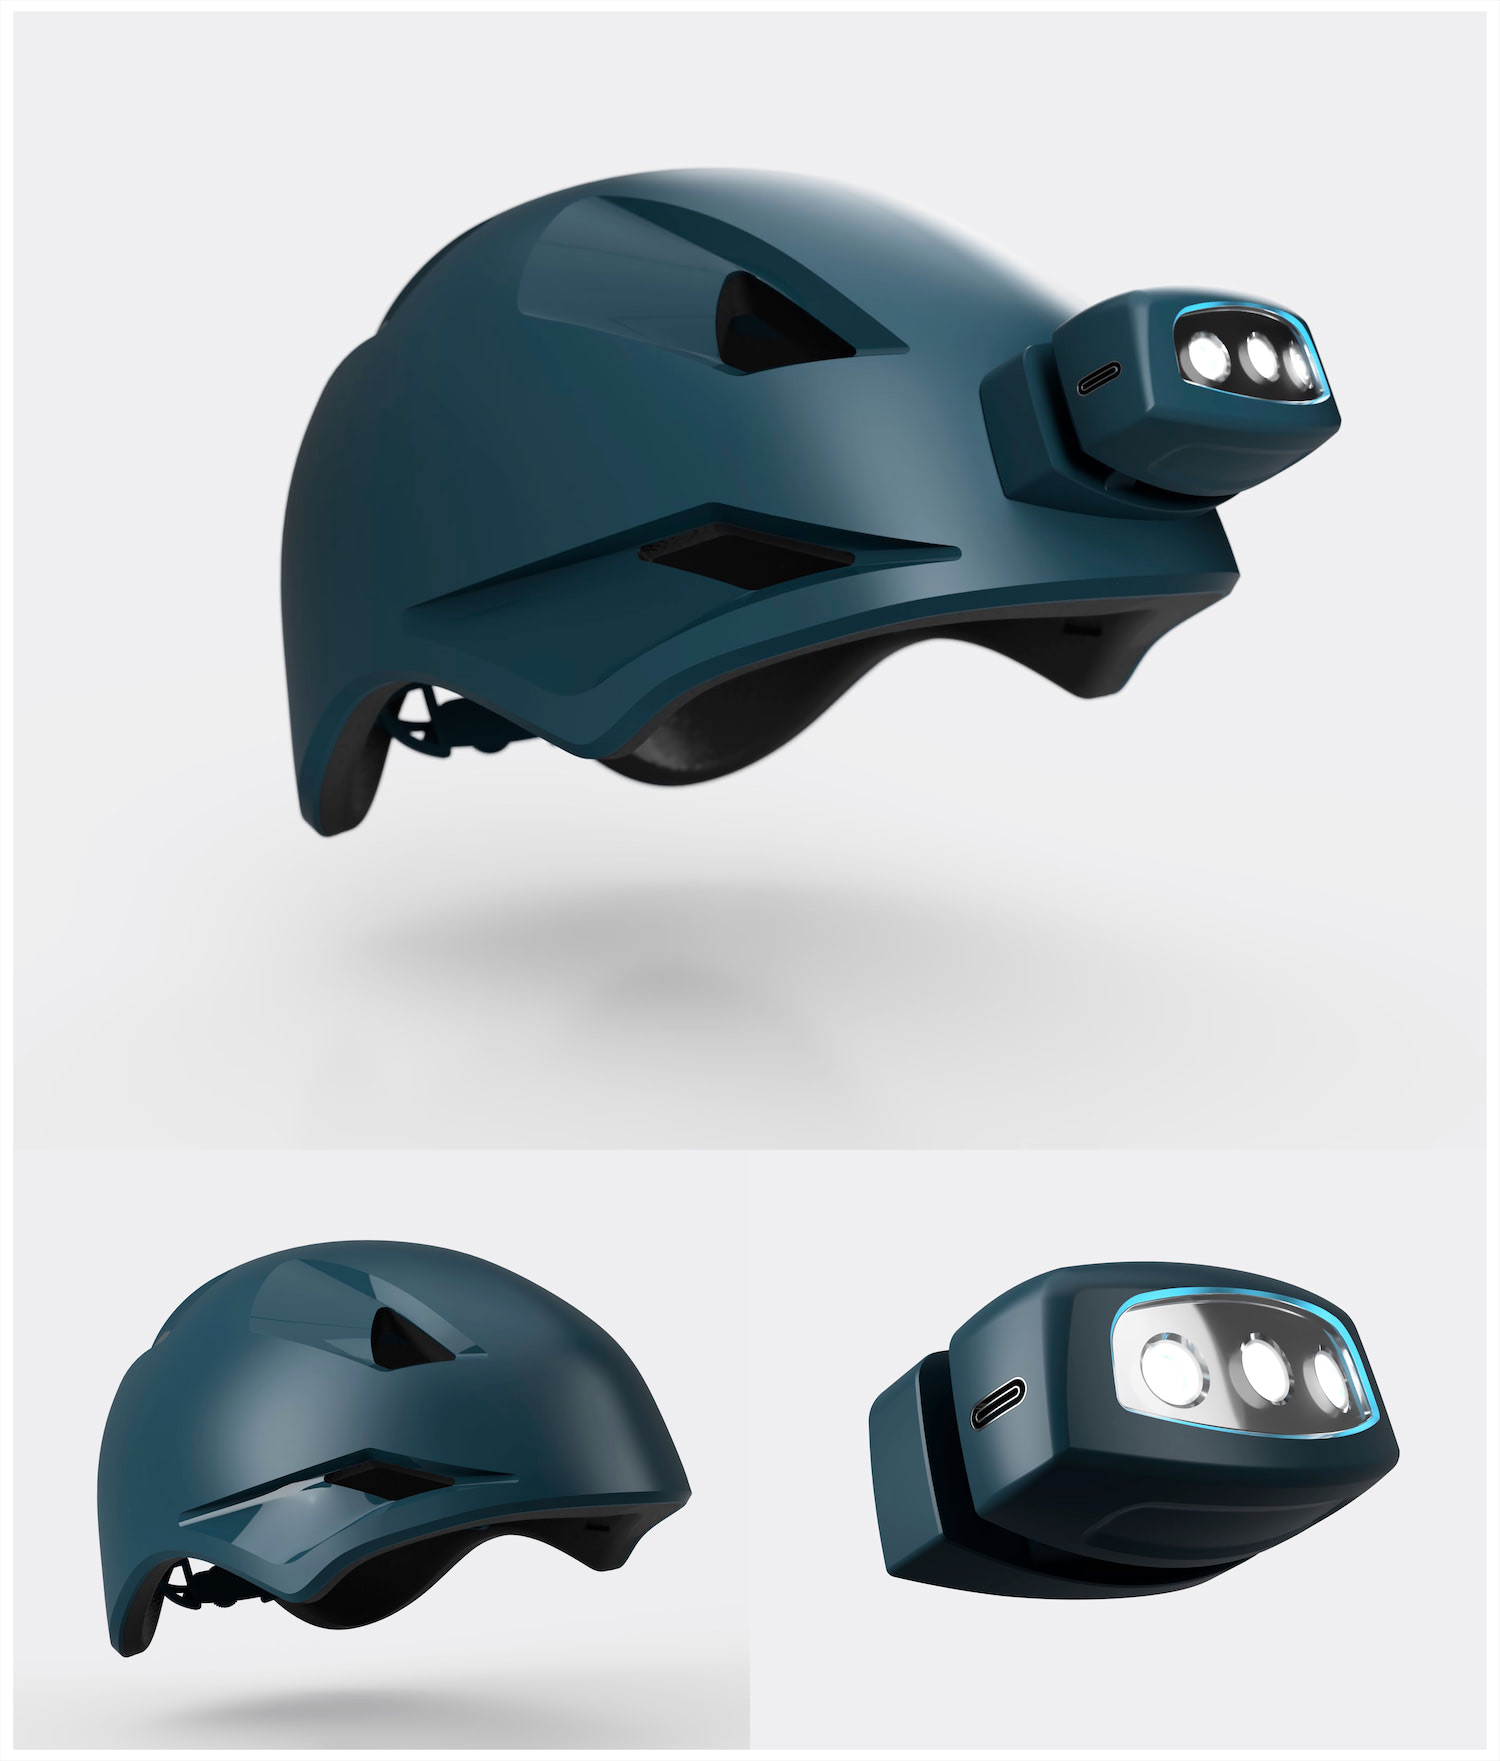 Alpinight system overview, displaying the helmet, headlamp, and helmet/headlamp combination.